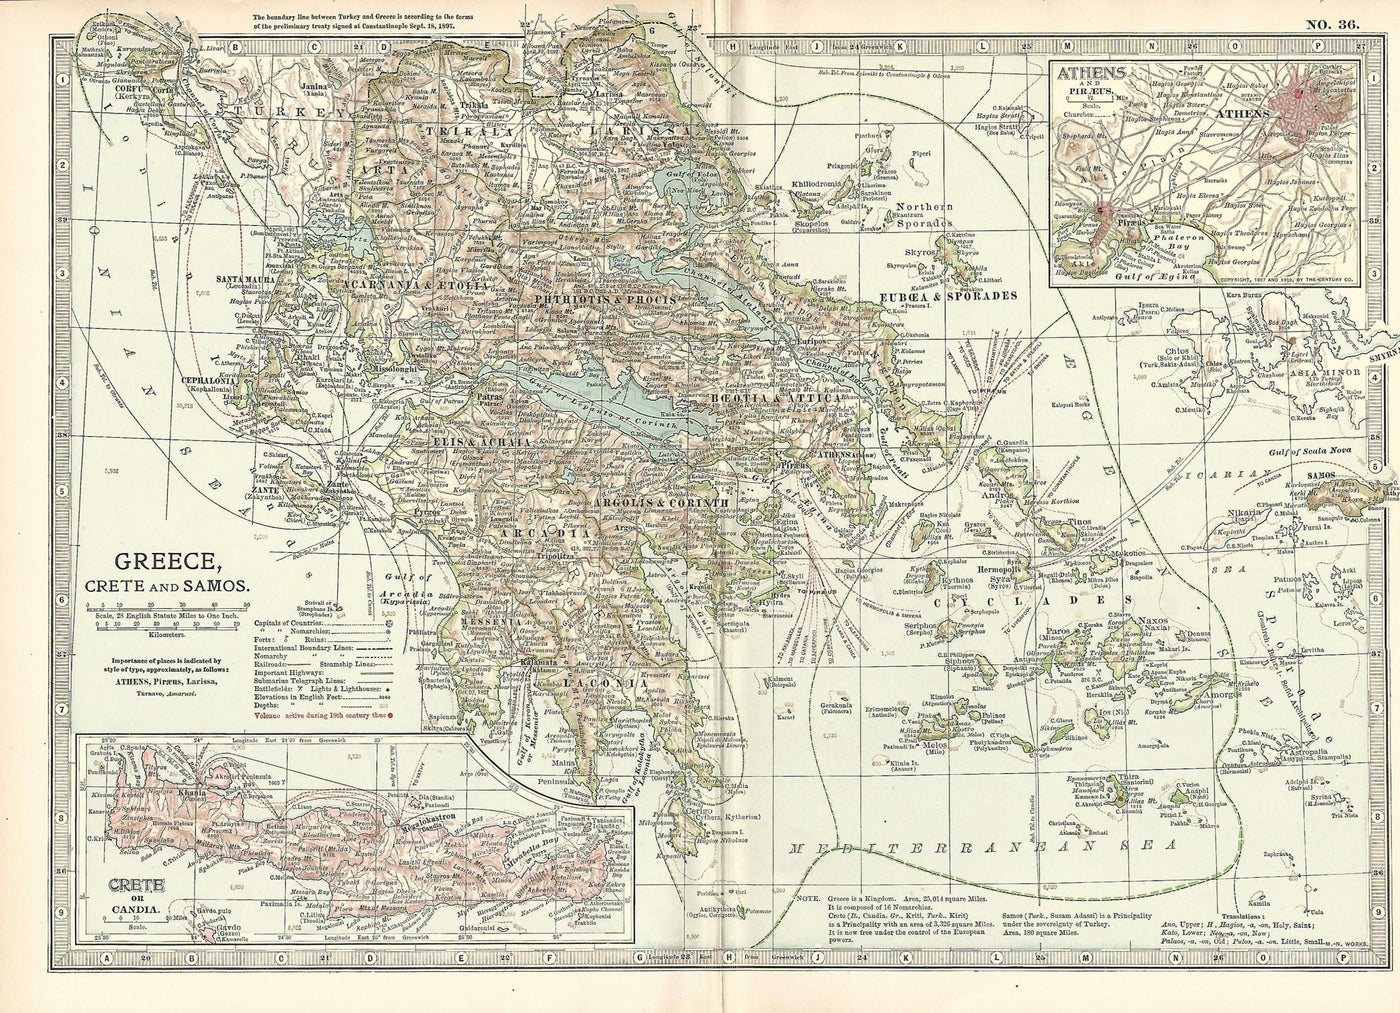 Ancient Greece antique map Encyclopaedia Britannica published 1903